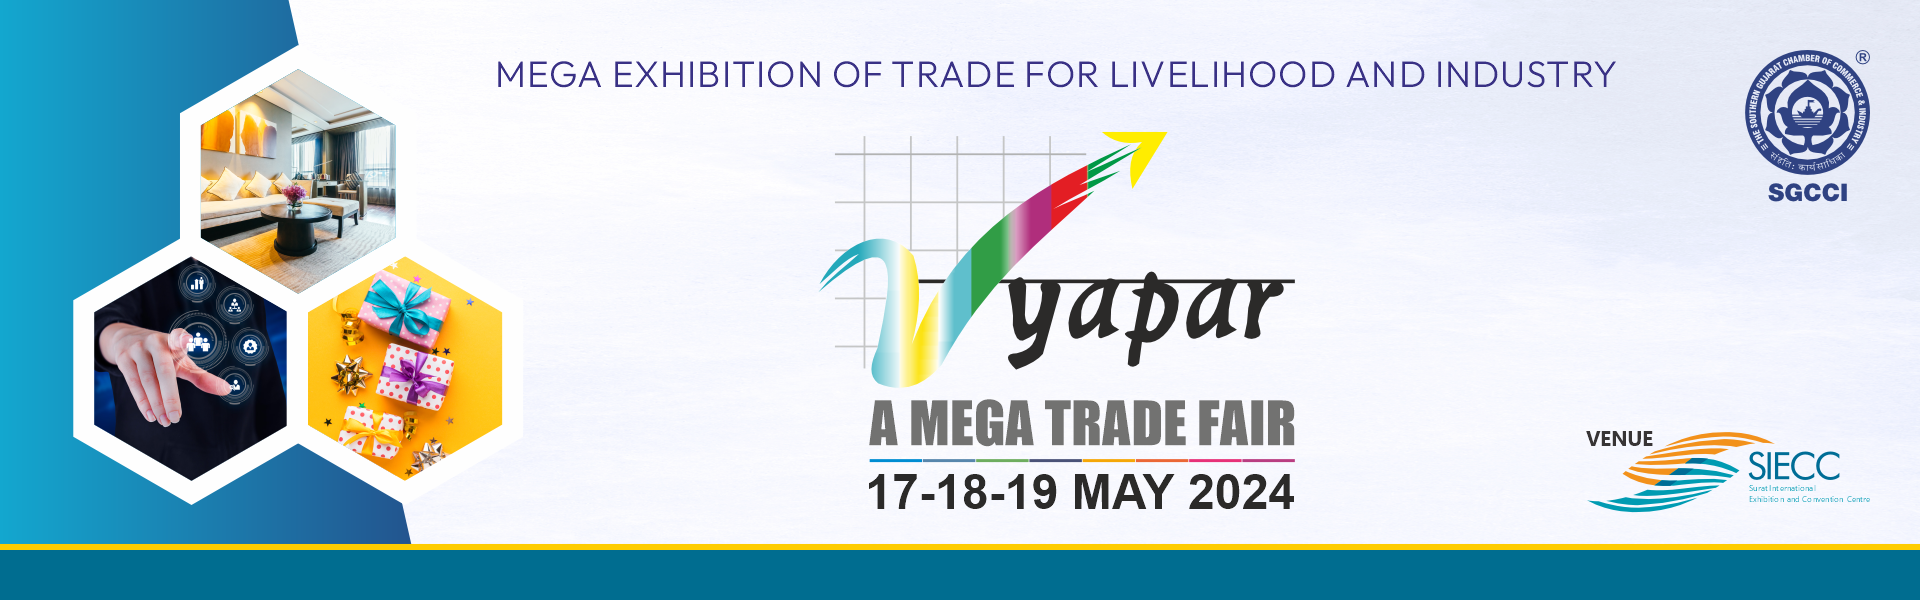 Webpage - Vyapar '24 (Trade Fair) (1920 X 600)_1